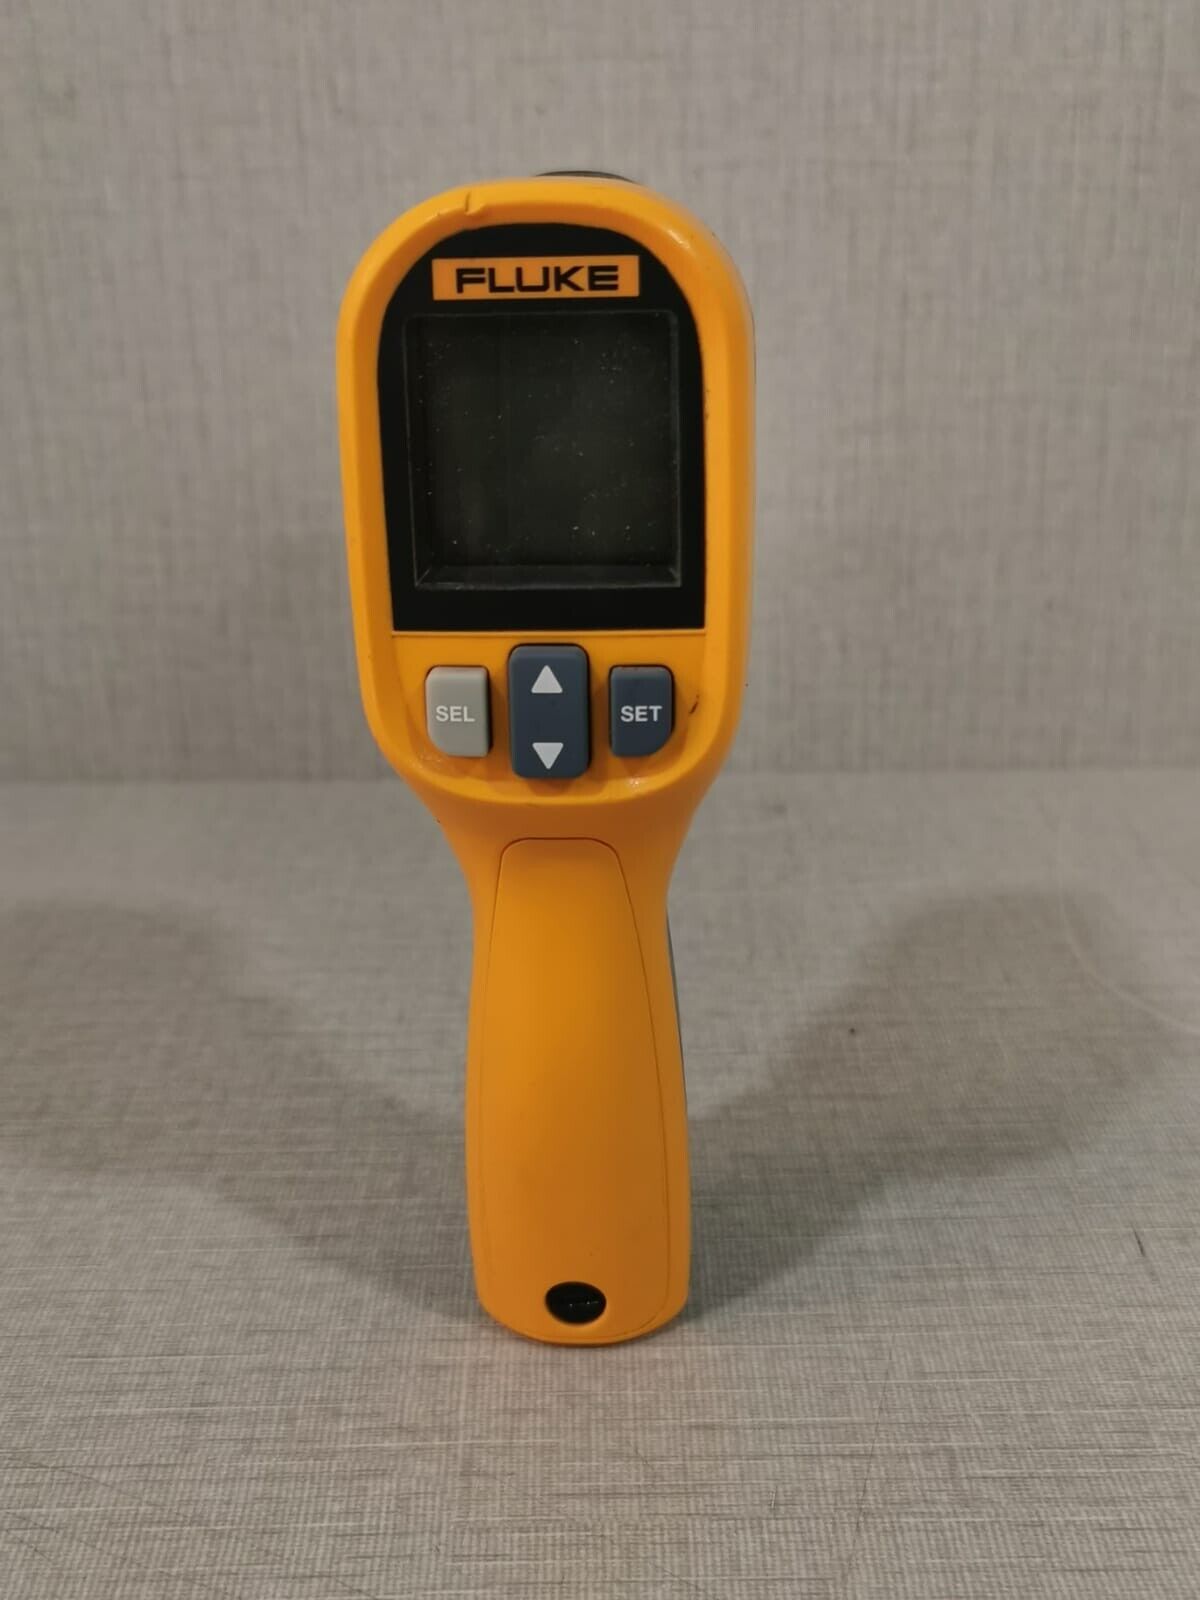 Fluke 59 Max - Infrared thermometer